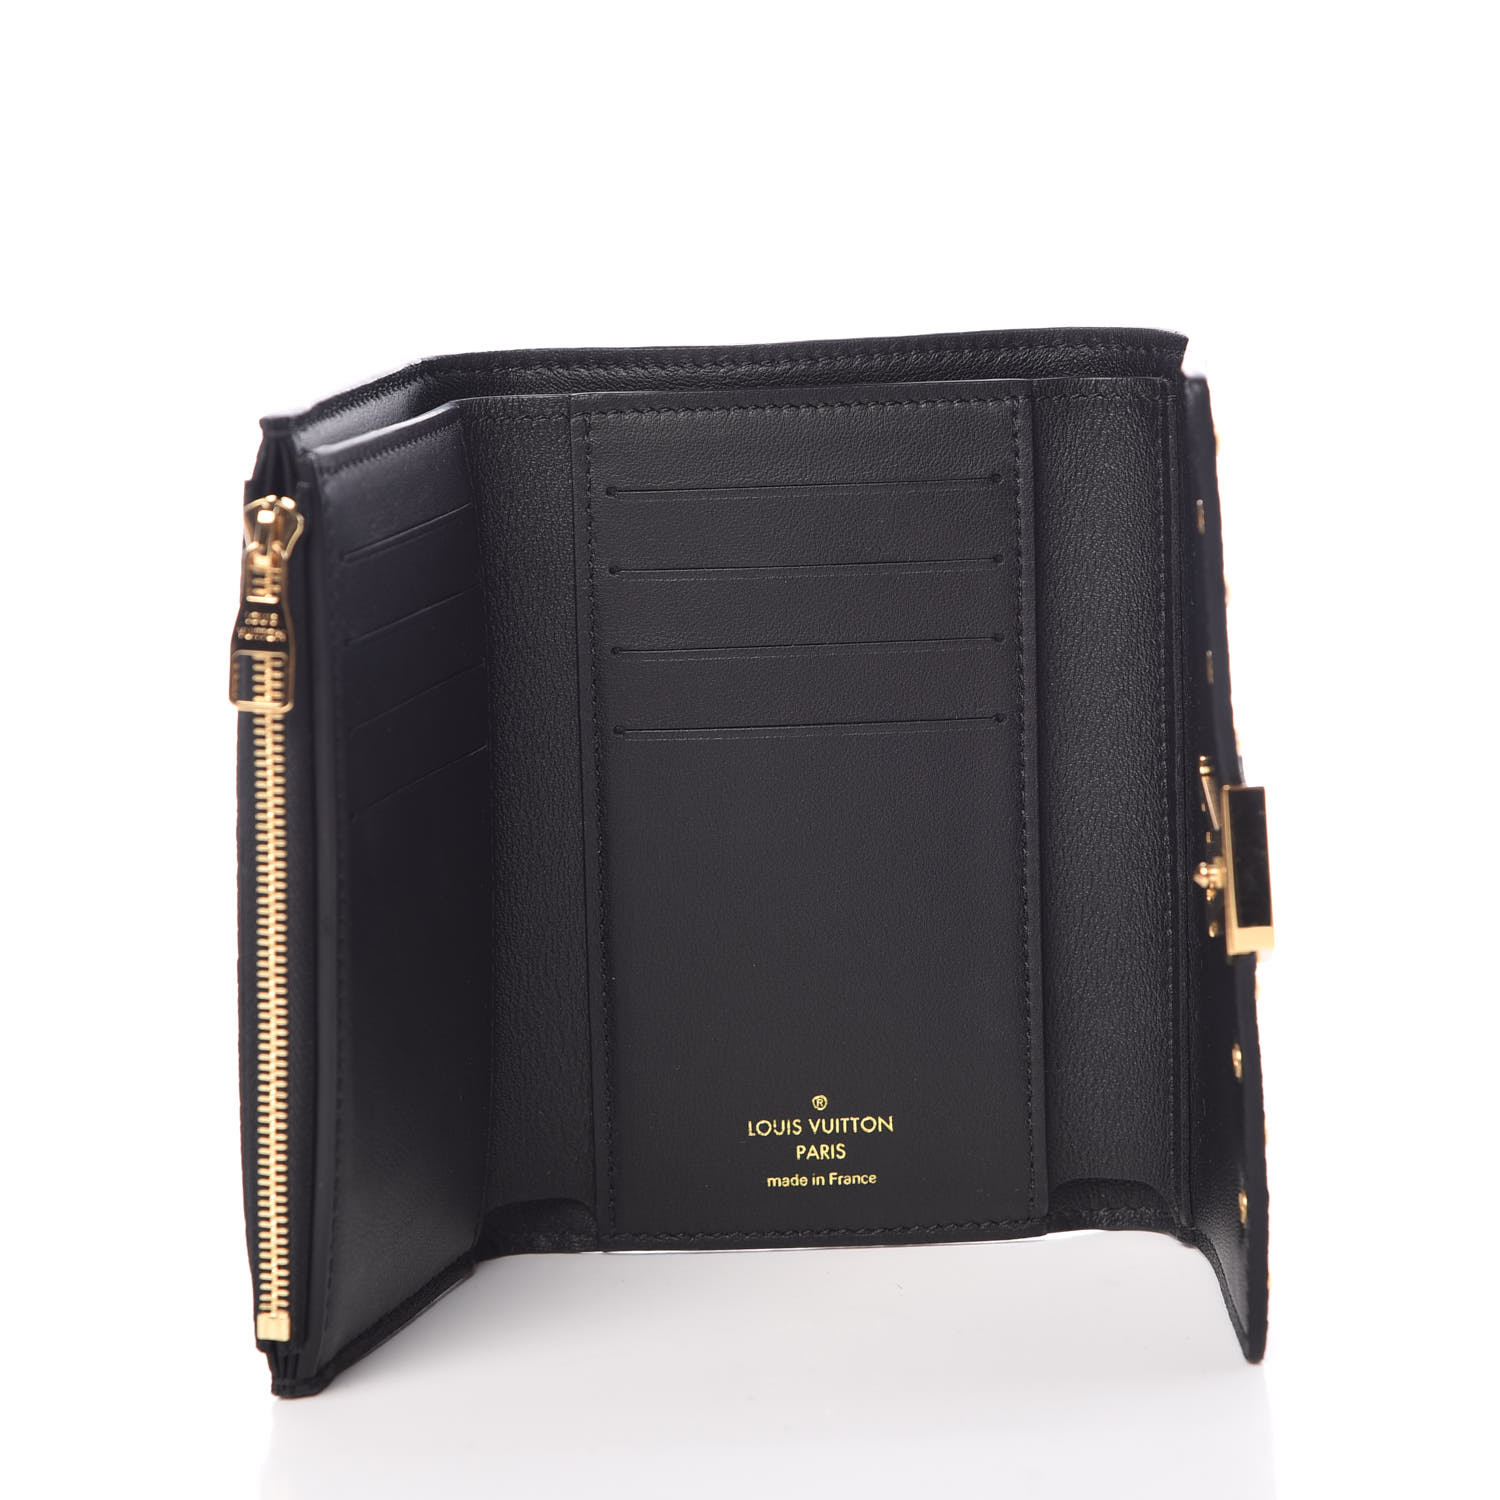 LOUIS VUITTON Taurillon Capucines Studded Compact Wallet Black 371664